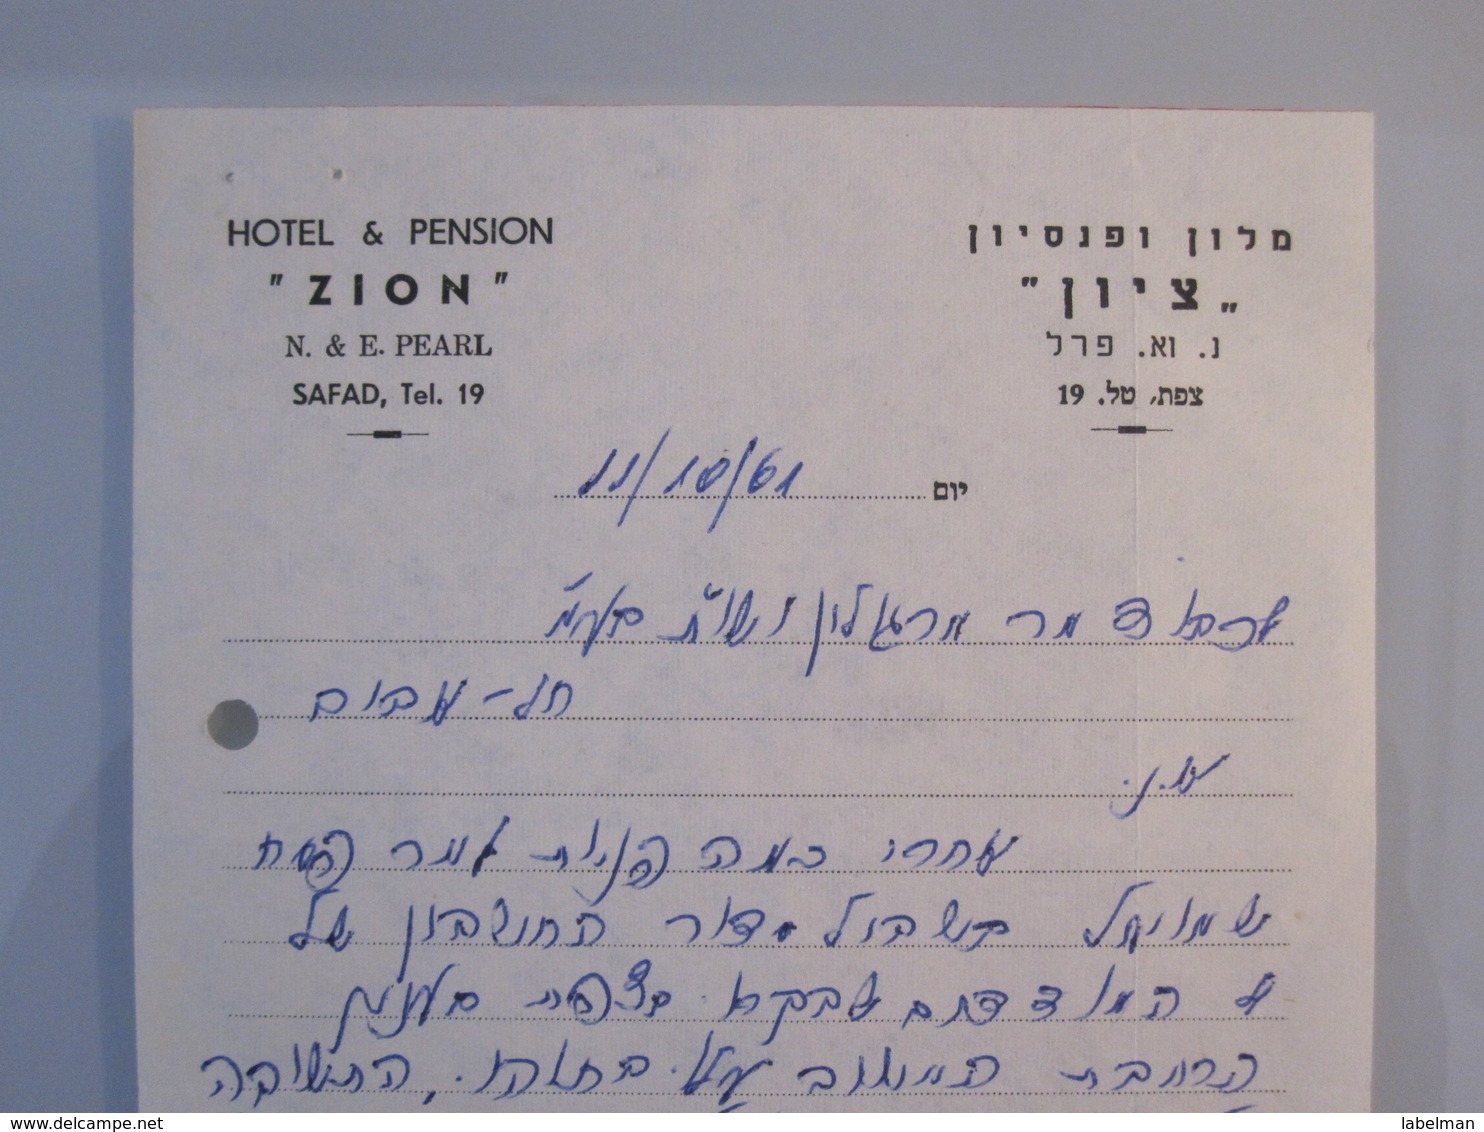 ISRAEL PALESTINE HOTEL PENSION REST GUEST INN HOUSE ZION PEARL SAFAD BILL INVOICE VOUCHER - Manuscrits